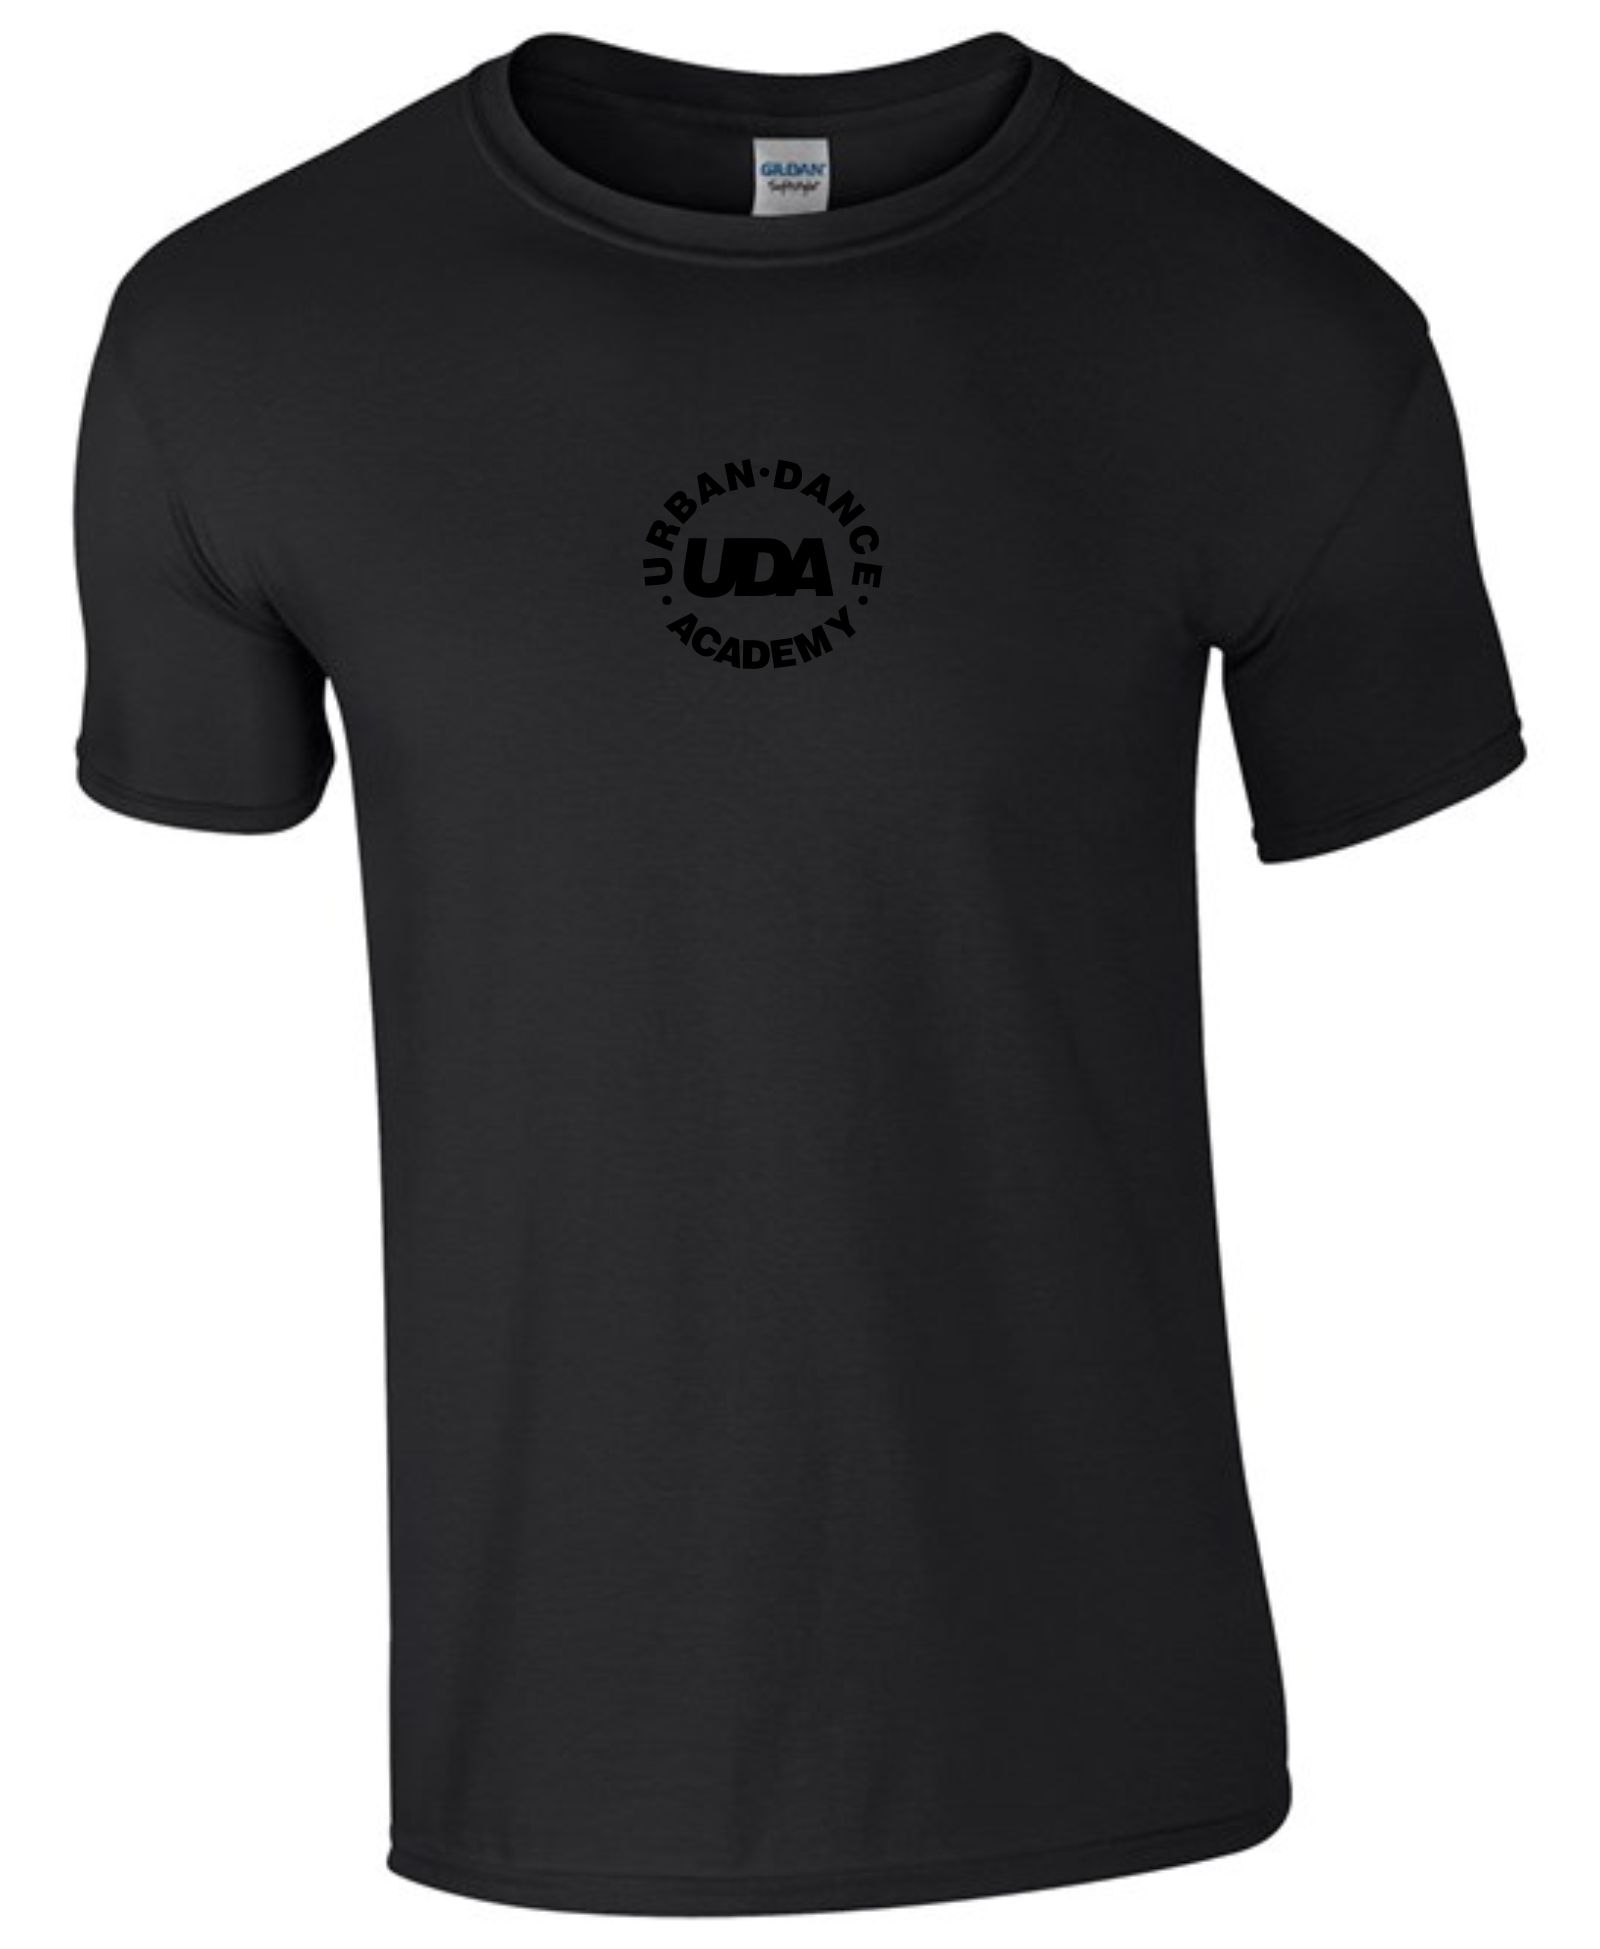 LIMITED EDITION: UDA – T-Shirt Short Sleeve Adults (Black on Black)